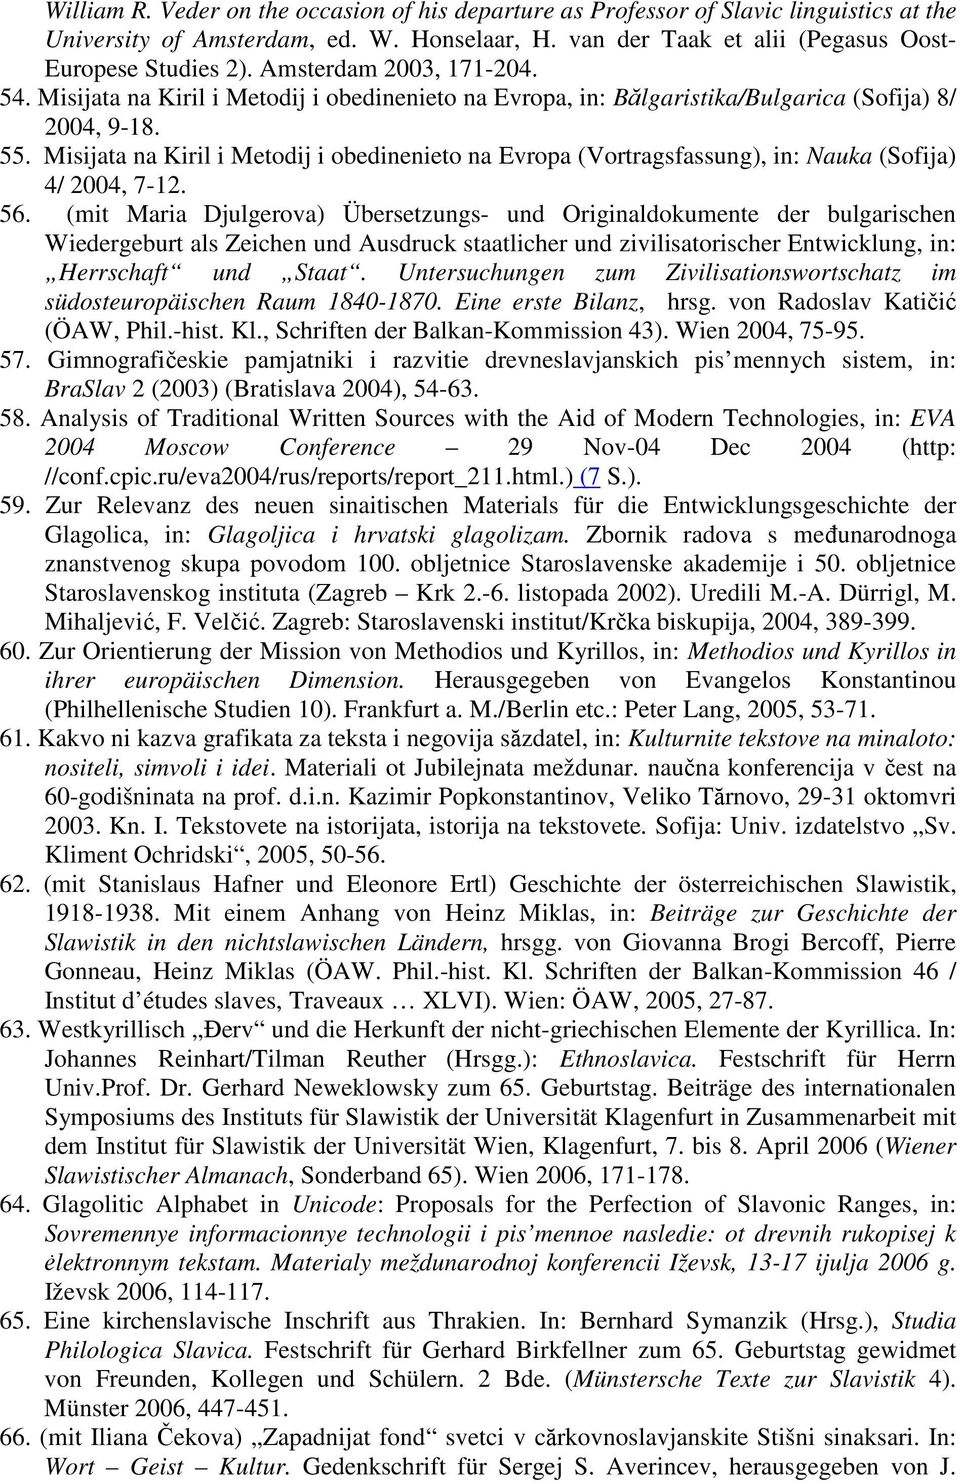 Misijata na Kiril i Metodij i obedinenieto na Evropa (Vortragsfassung), in: Nauka (Sofija) 4/ 2004, 7-12. 56.